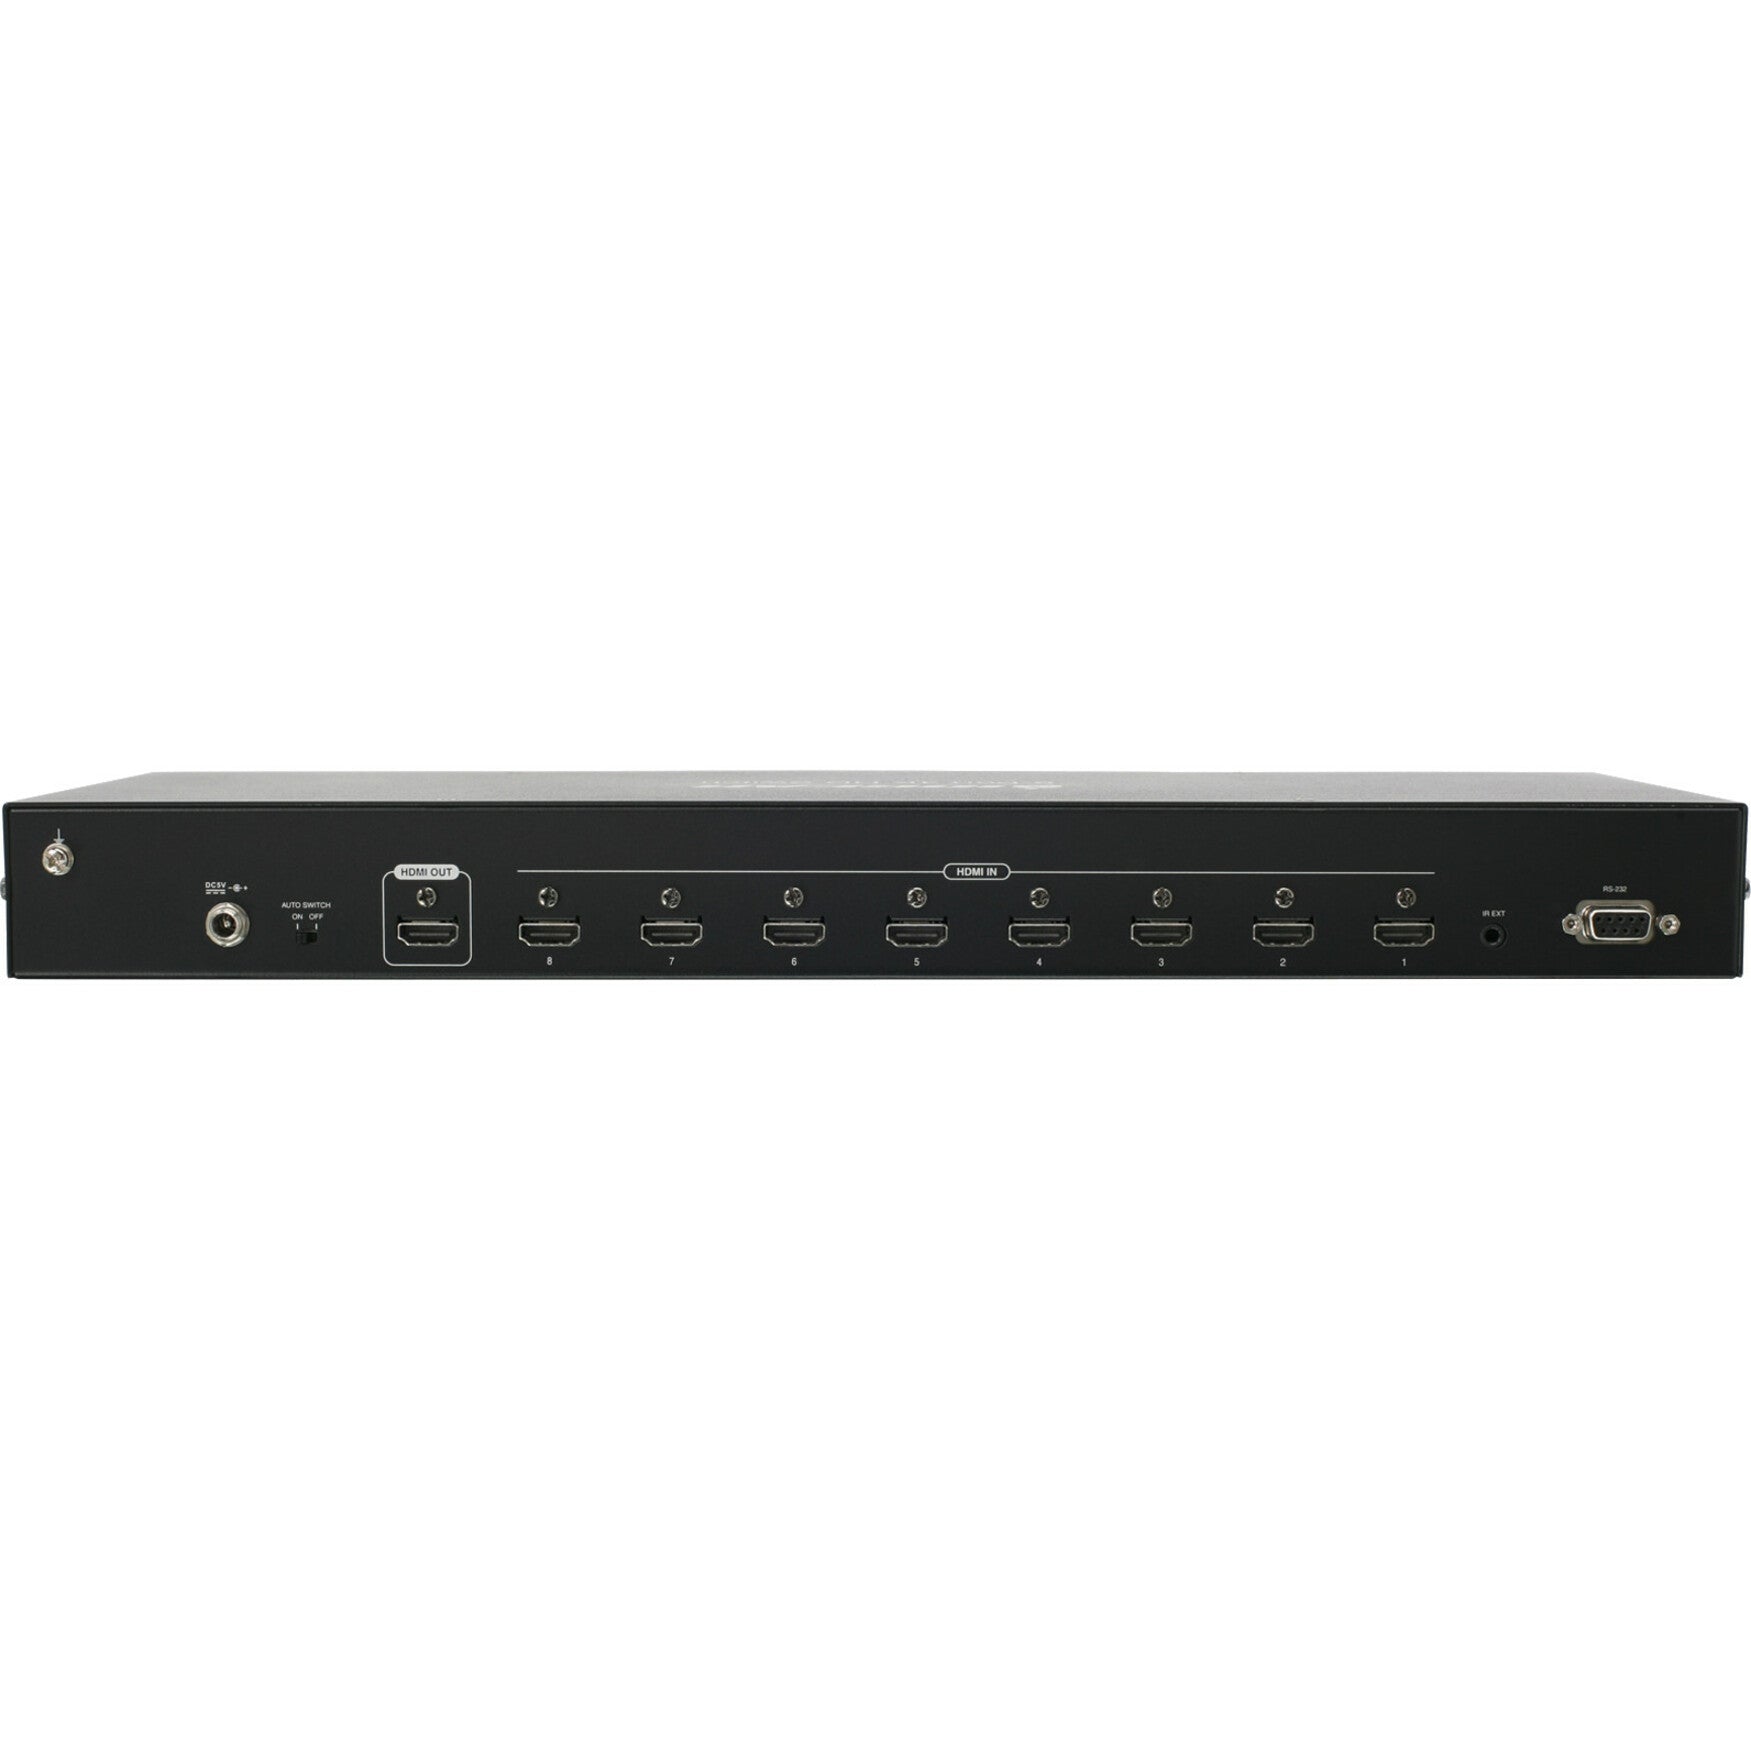 IOGEAR GHSW8481 True 4K 8-Port Switcher with HDMI Connection, 4096 x 2160 Video Resolution, 3 Year Warranty